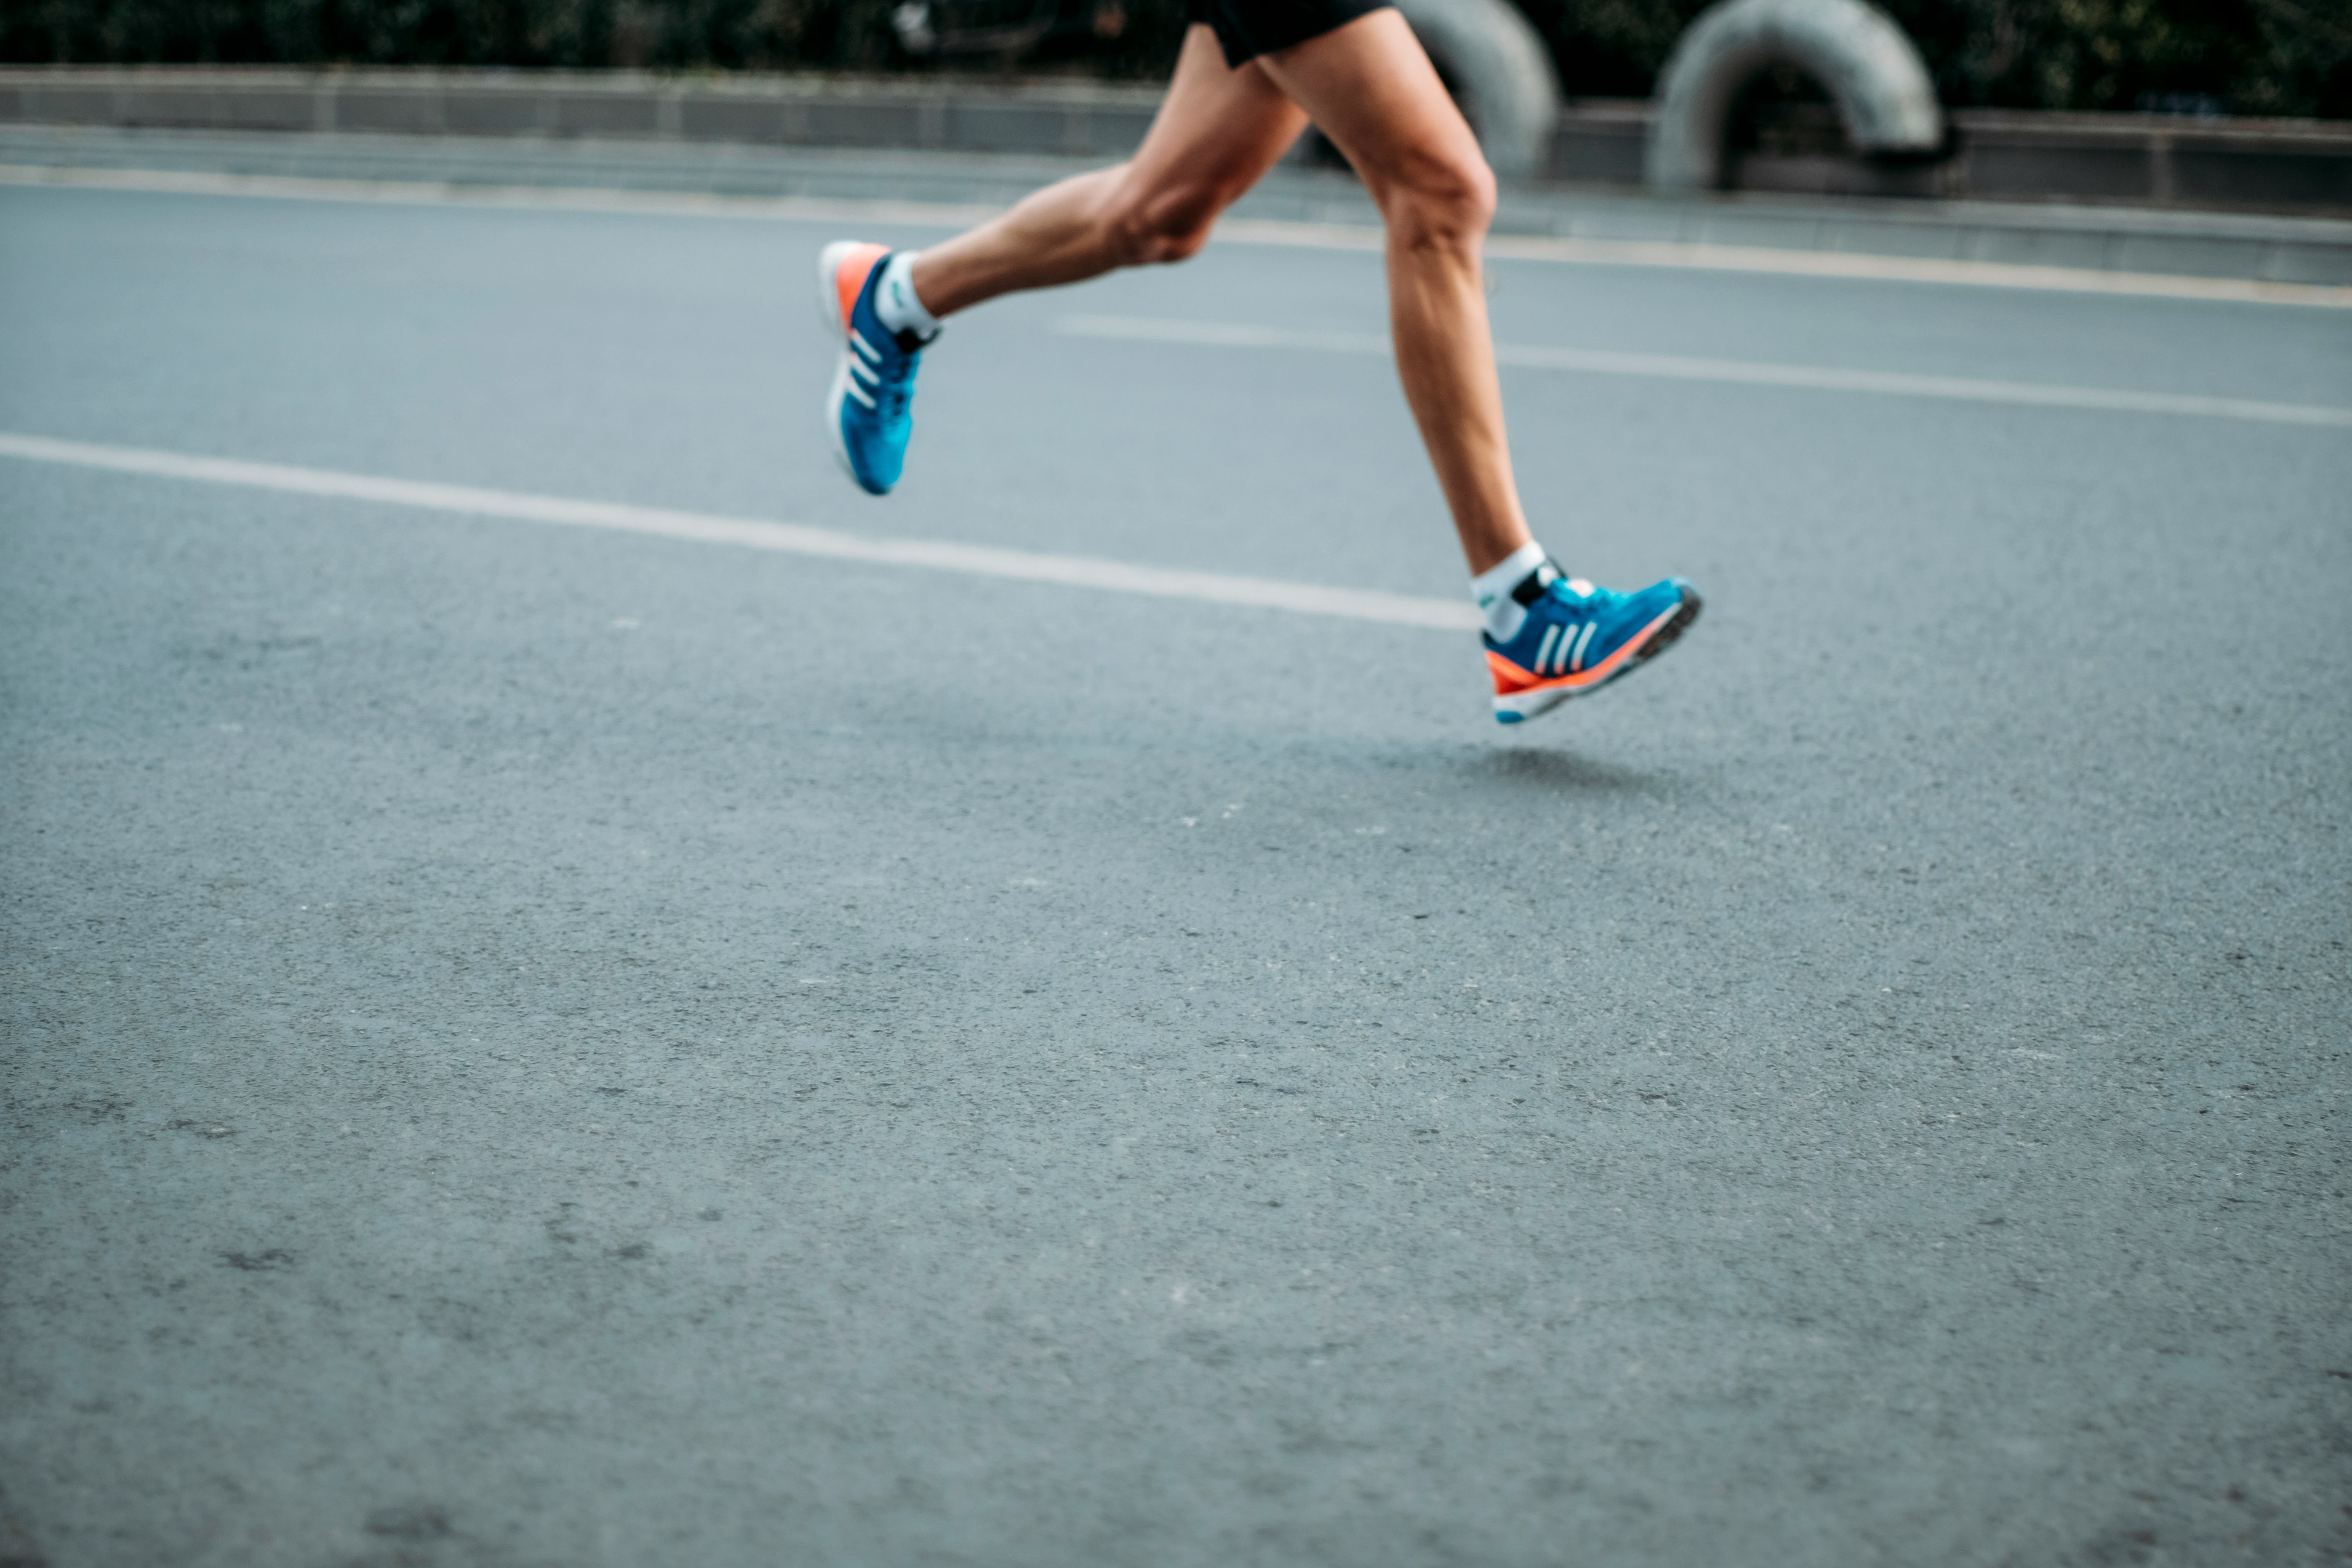 image of someone running on asphalt photo by sporlab